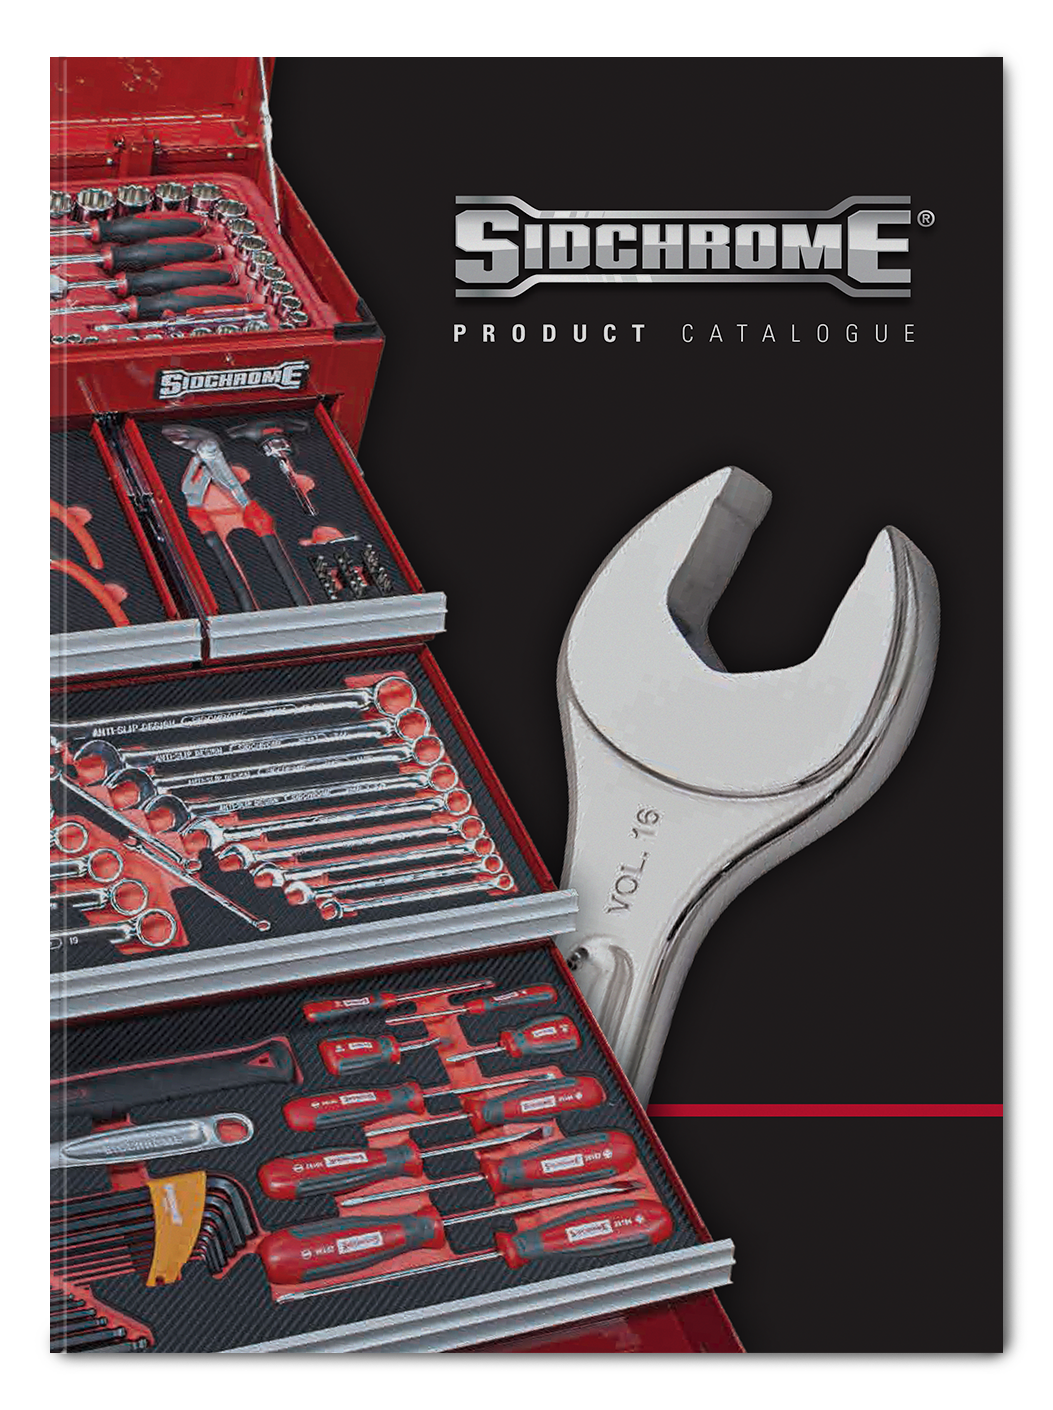 Podium Series - SIDCHROME Tools & Tool Storage